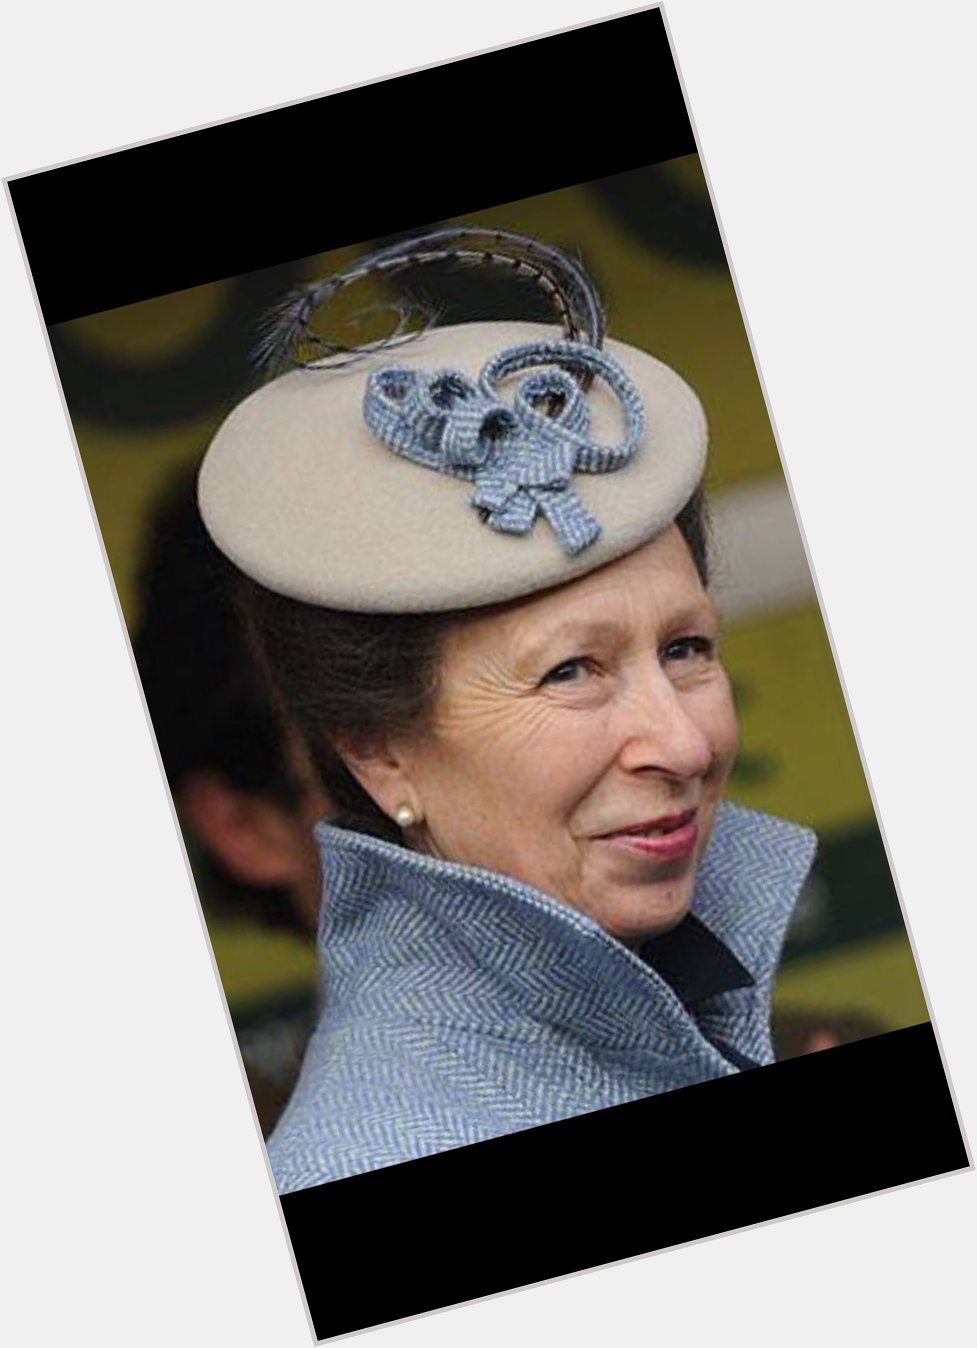 Happy 67th Birthday to Princess Anne, the Princess Royal. 